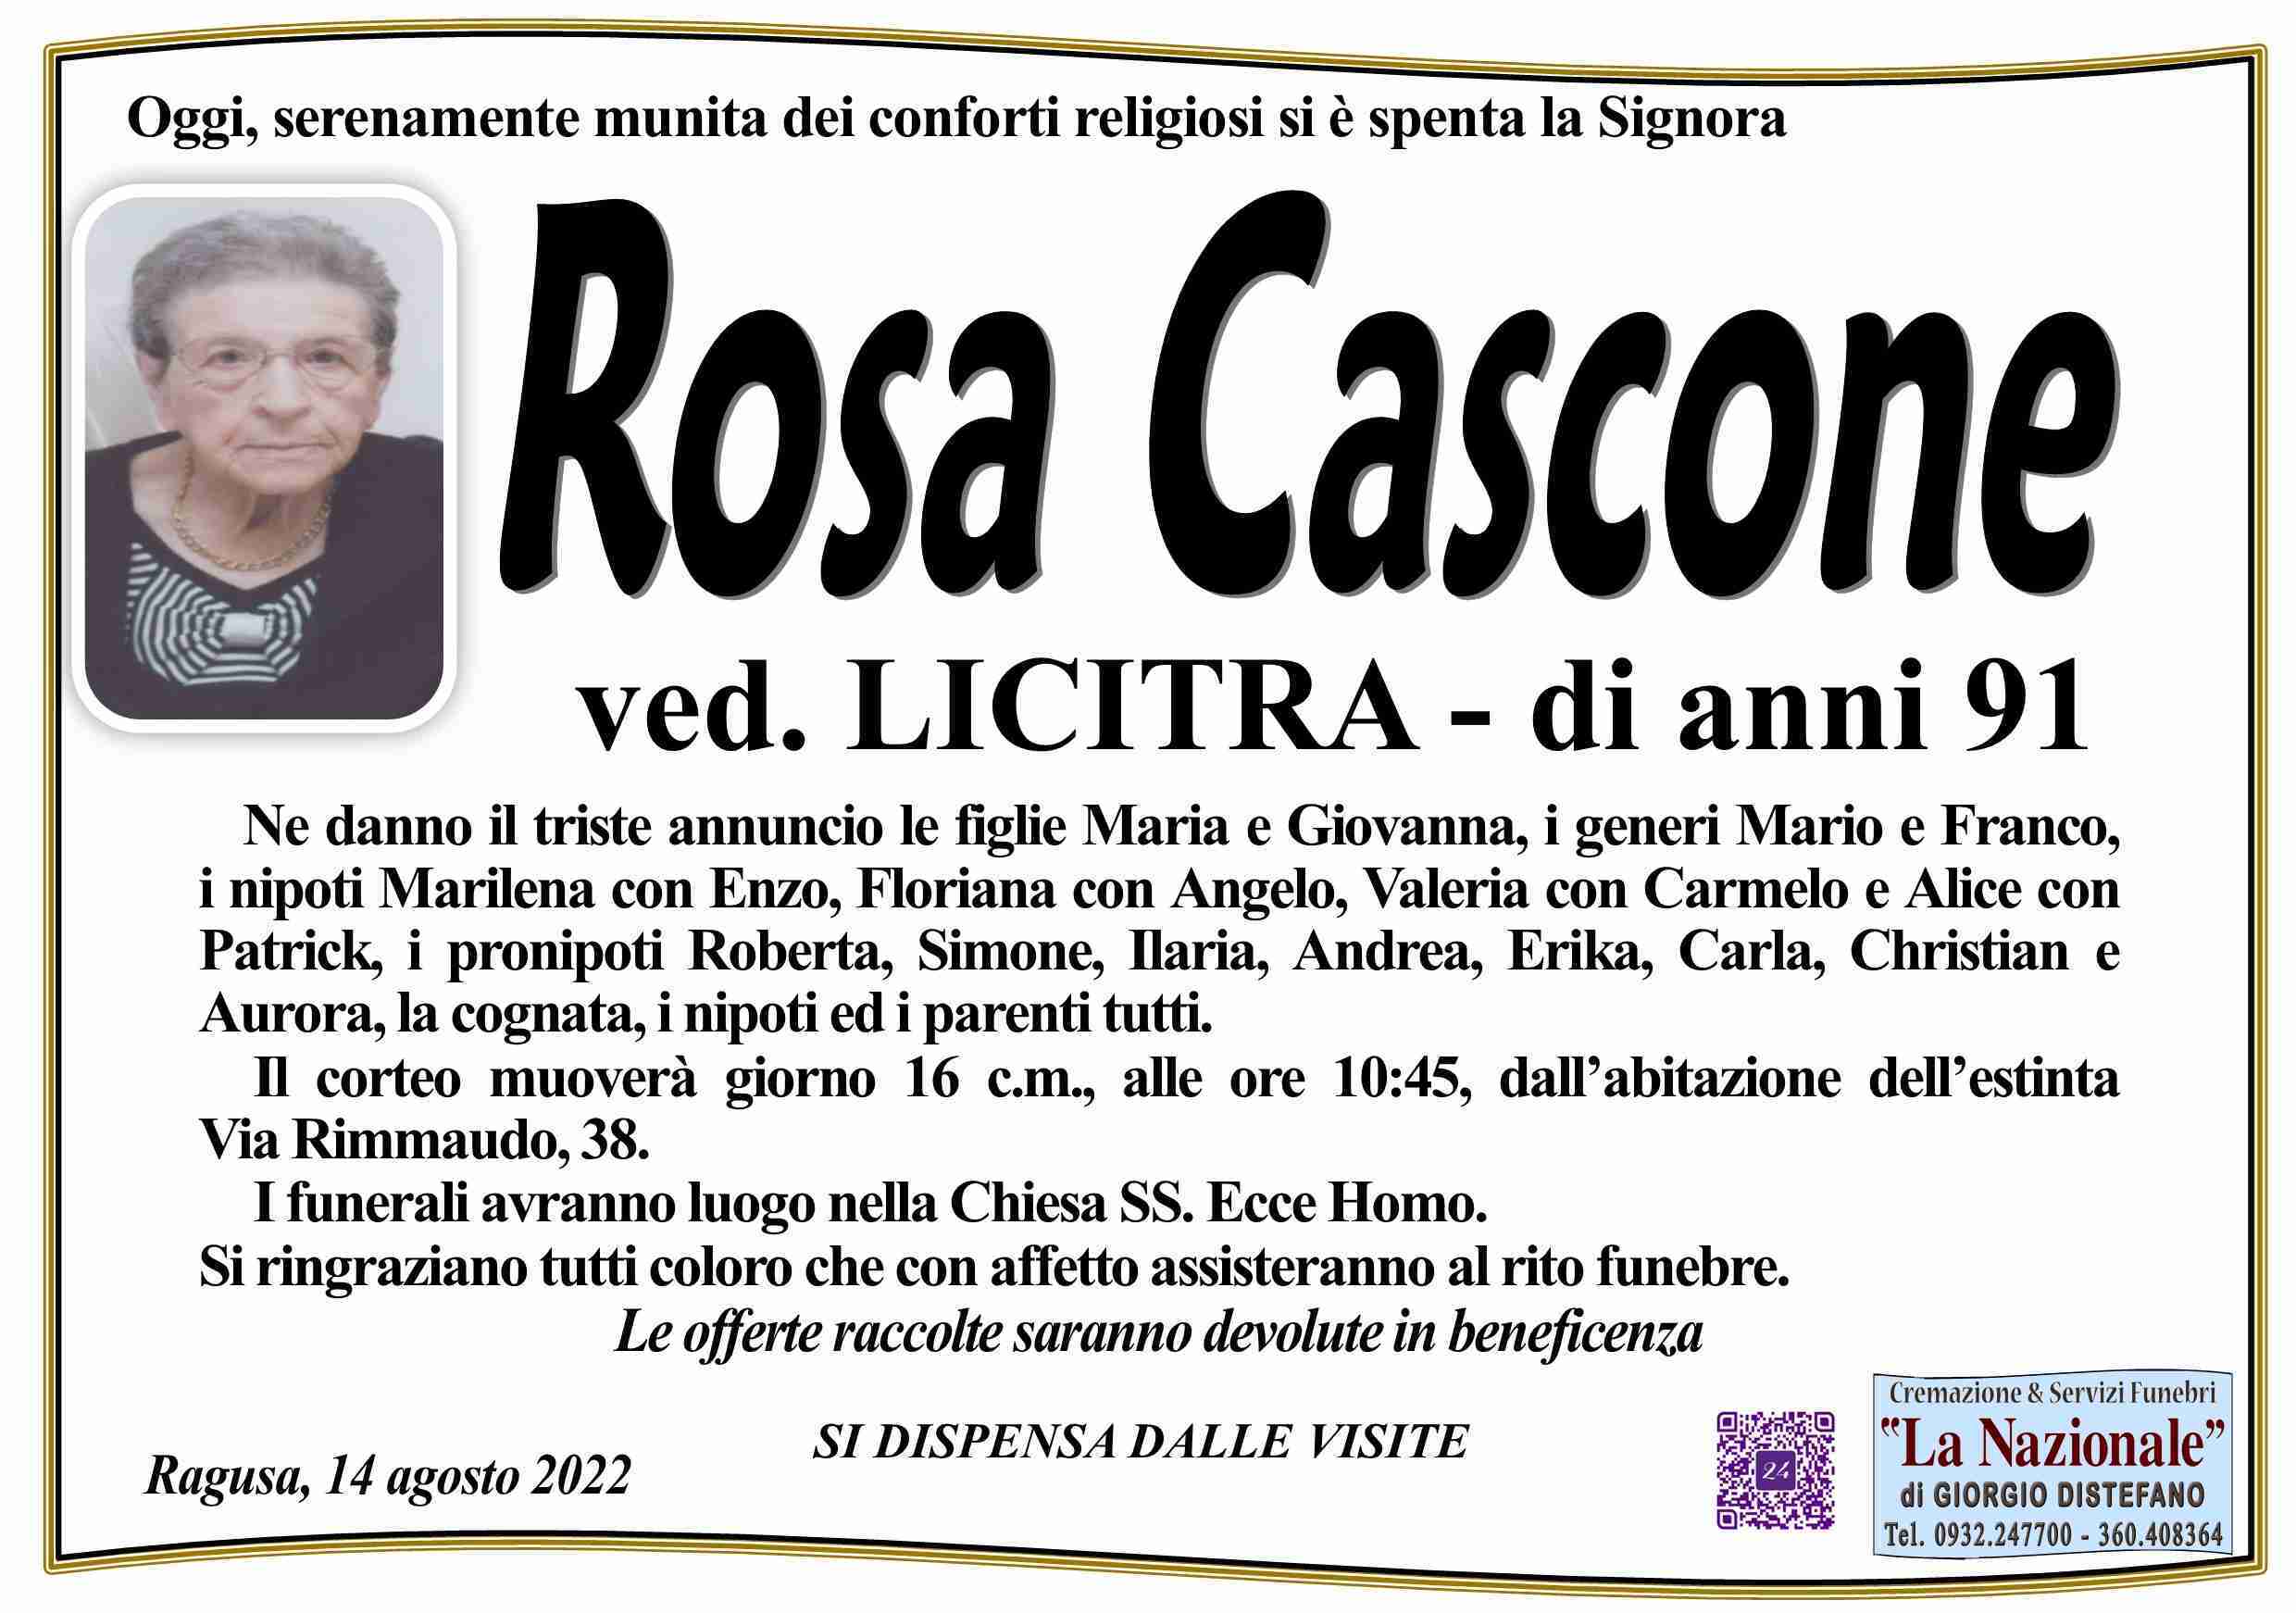 Rosa Cascone